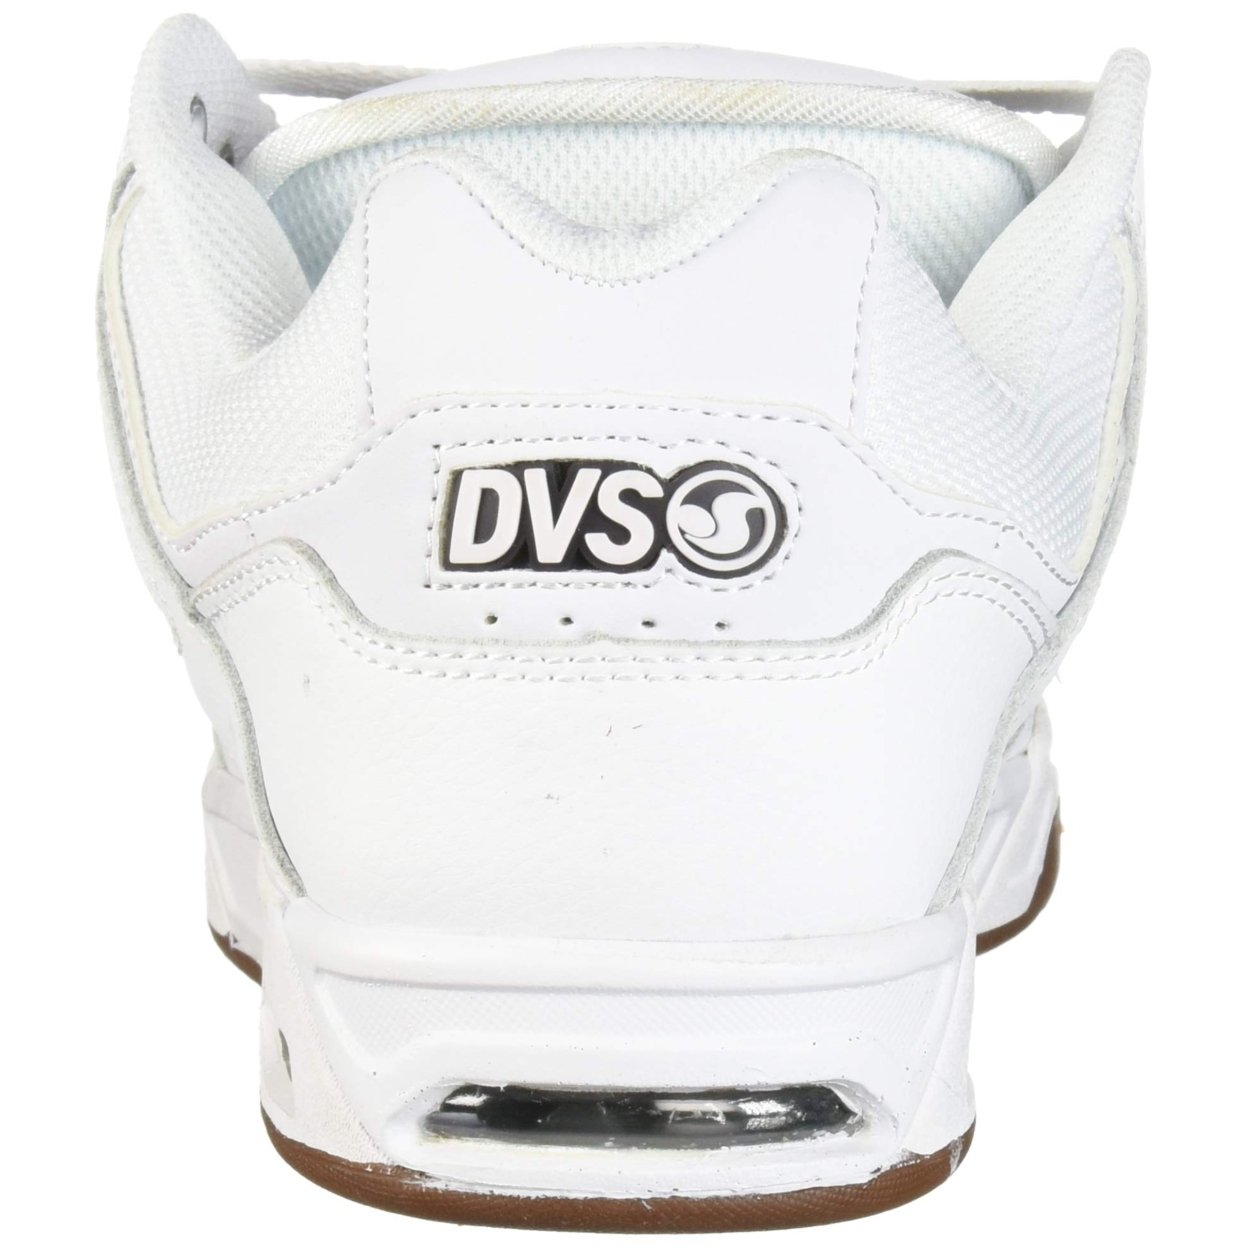 Dvs Footwear Mens Men's Enduro HEIR Skate Shoe WHITE GUM NUBUCK - WHITE GUM NUBUCK, 13-M